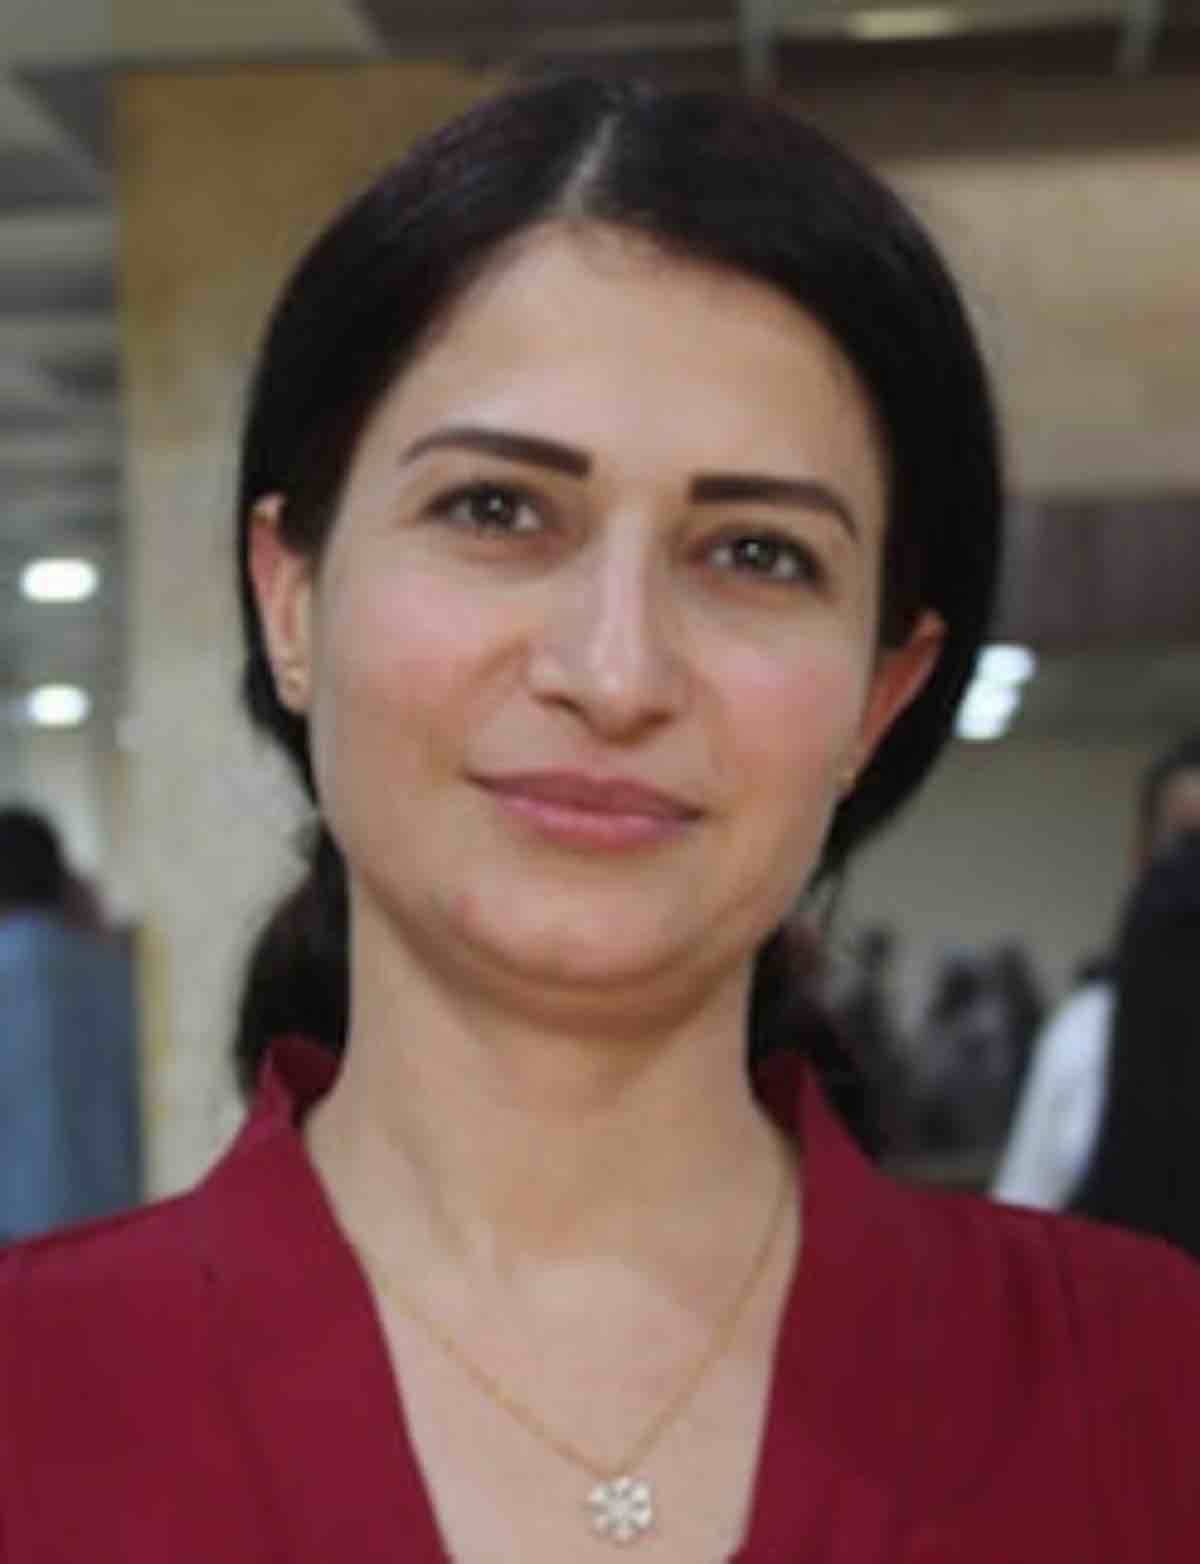 Hevrin Khalaf, chi era l'attivista per i diritti delle donne trucidata in Siria